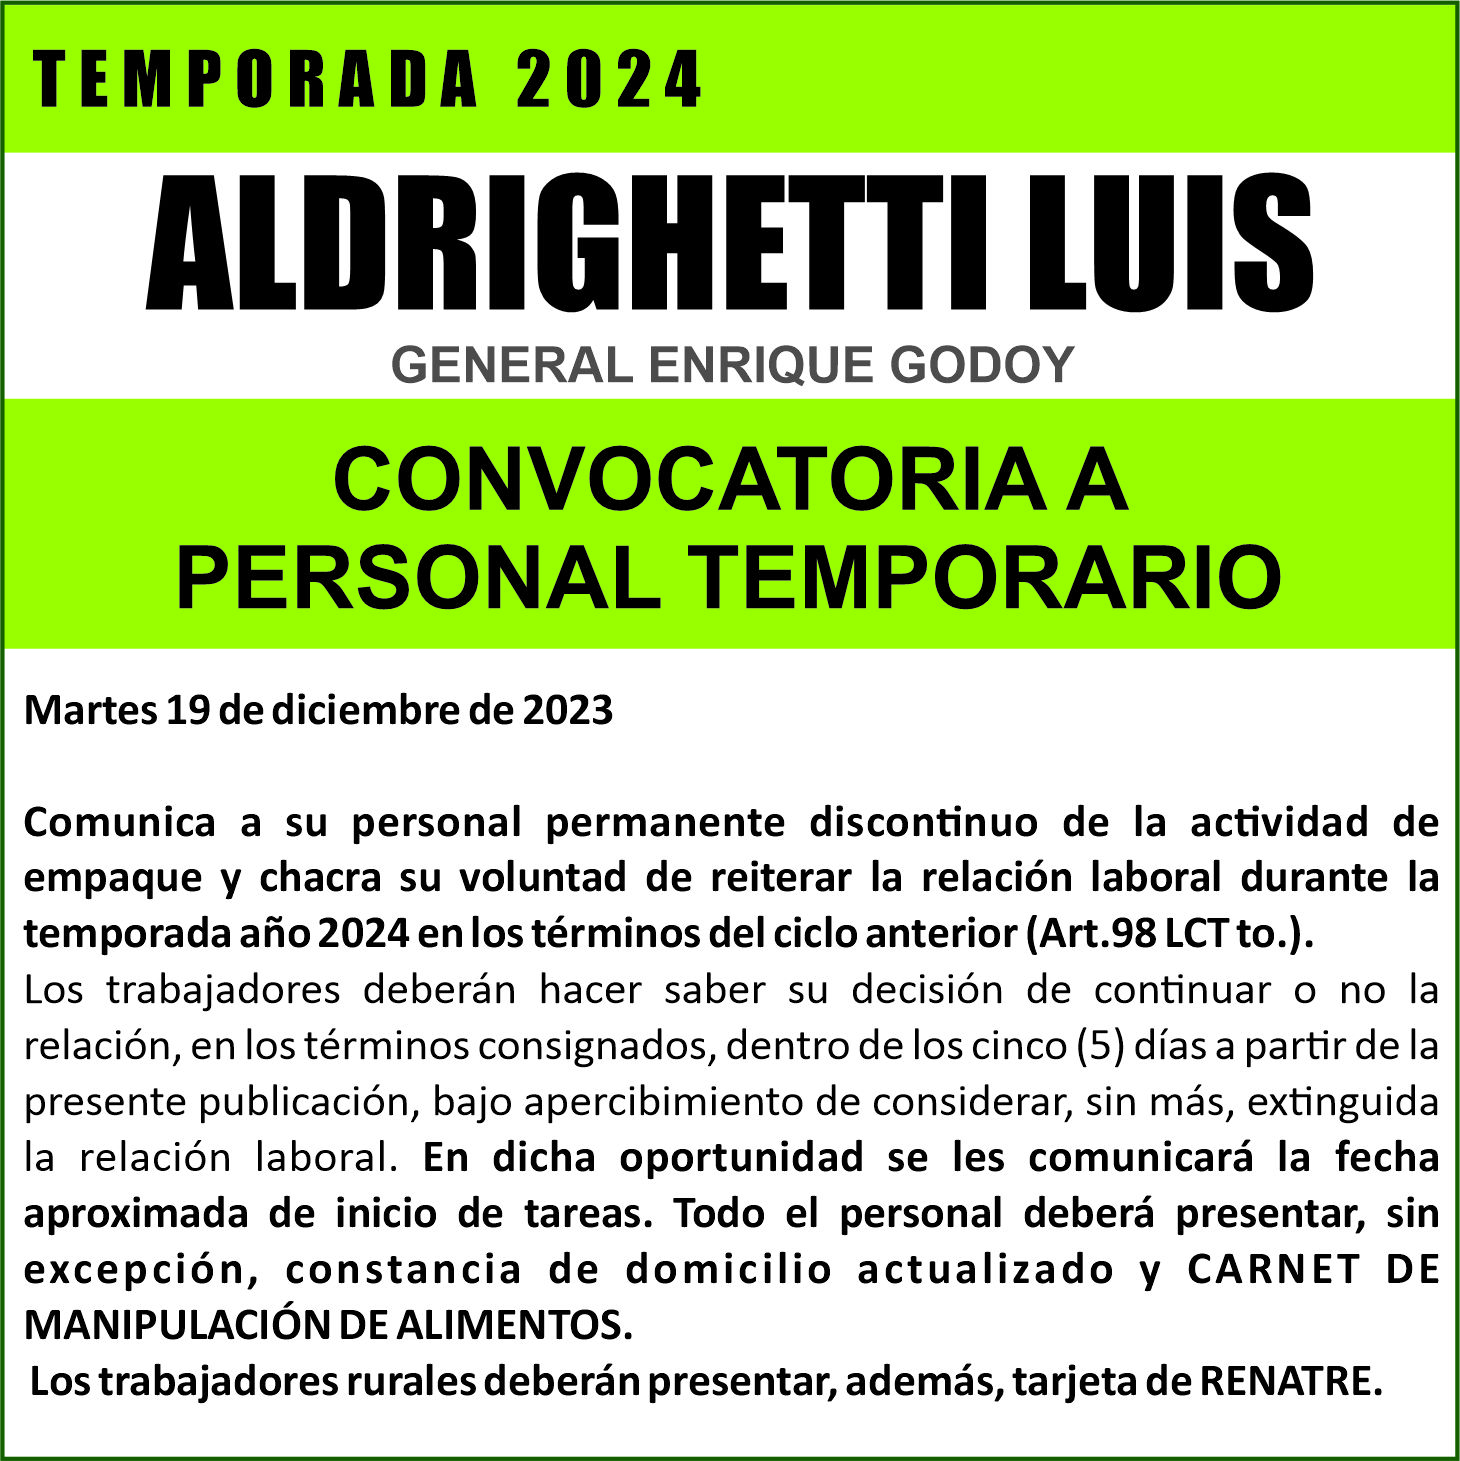 Luis Aldrighetti convoca a todo su personal de temporada 2024